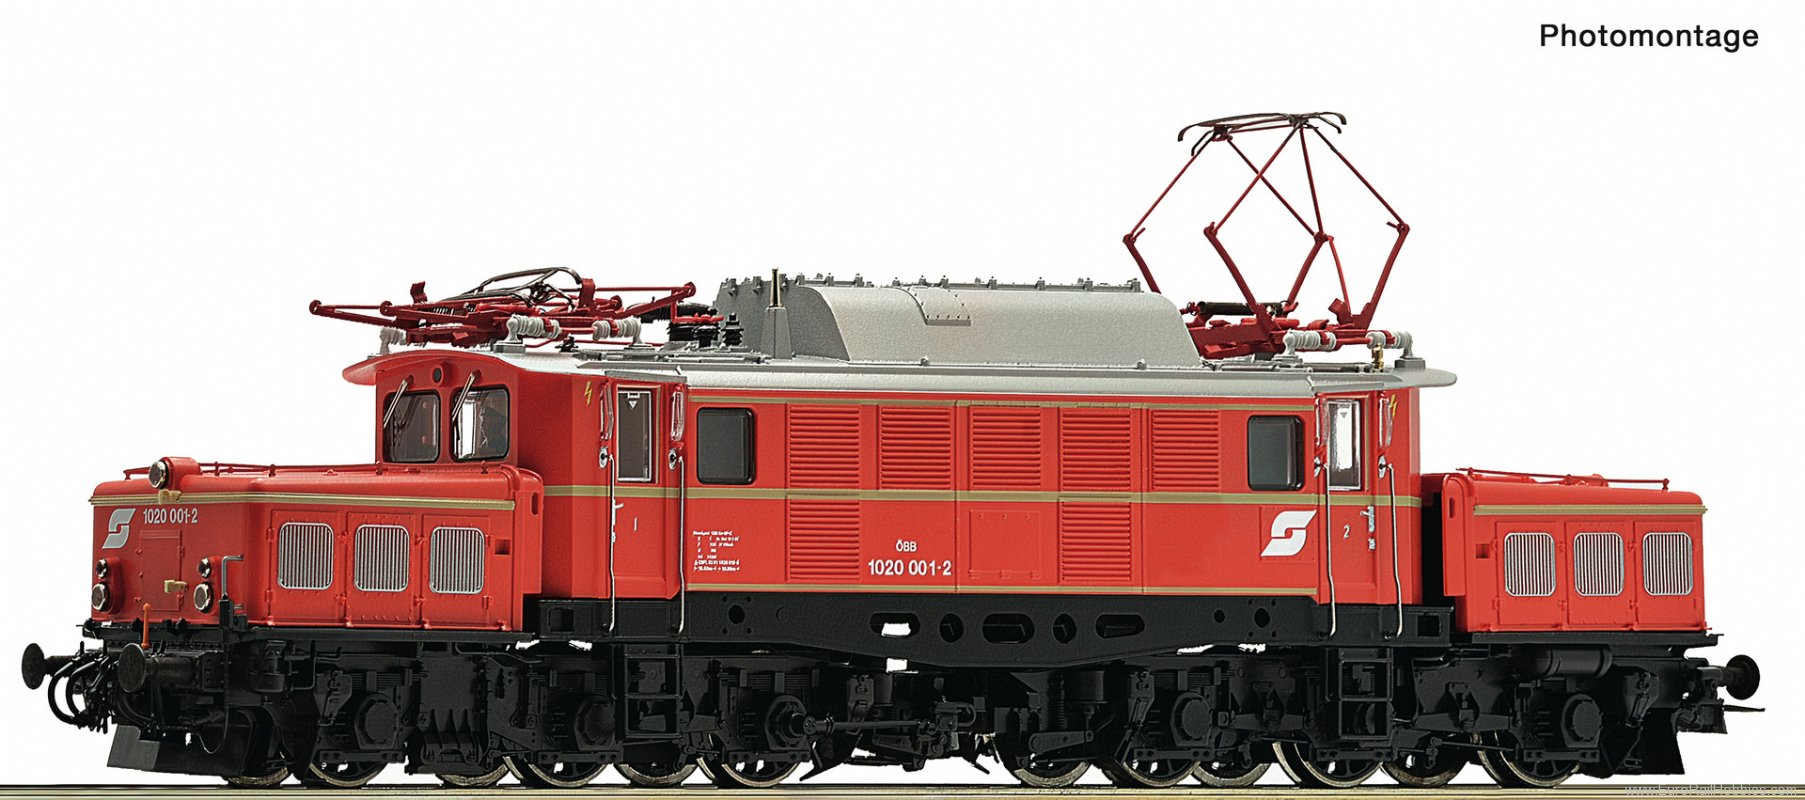 Roco 7500009 Electric locomotive 1020 001-2 ÃBB (DC Ana